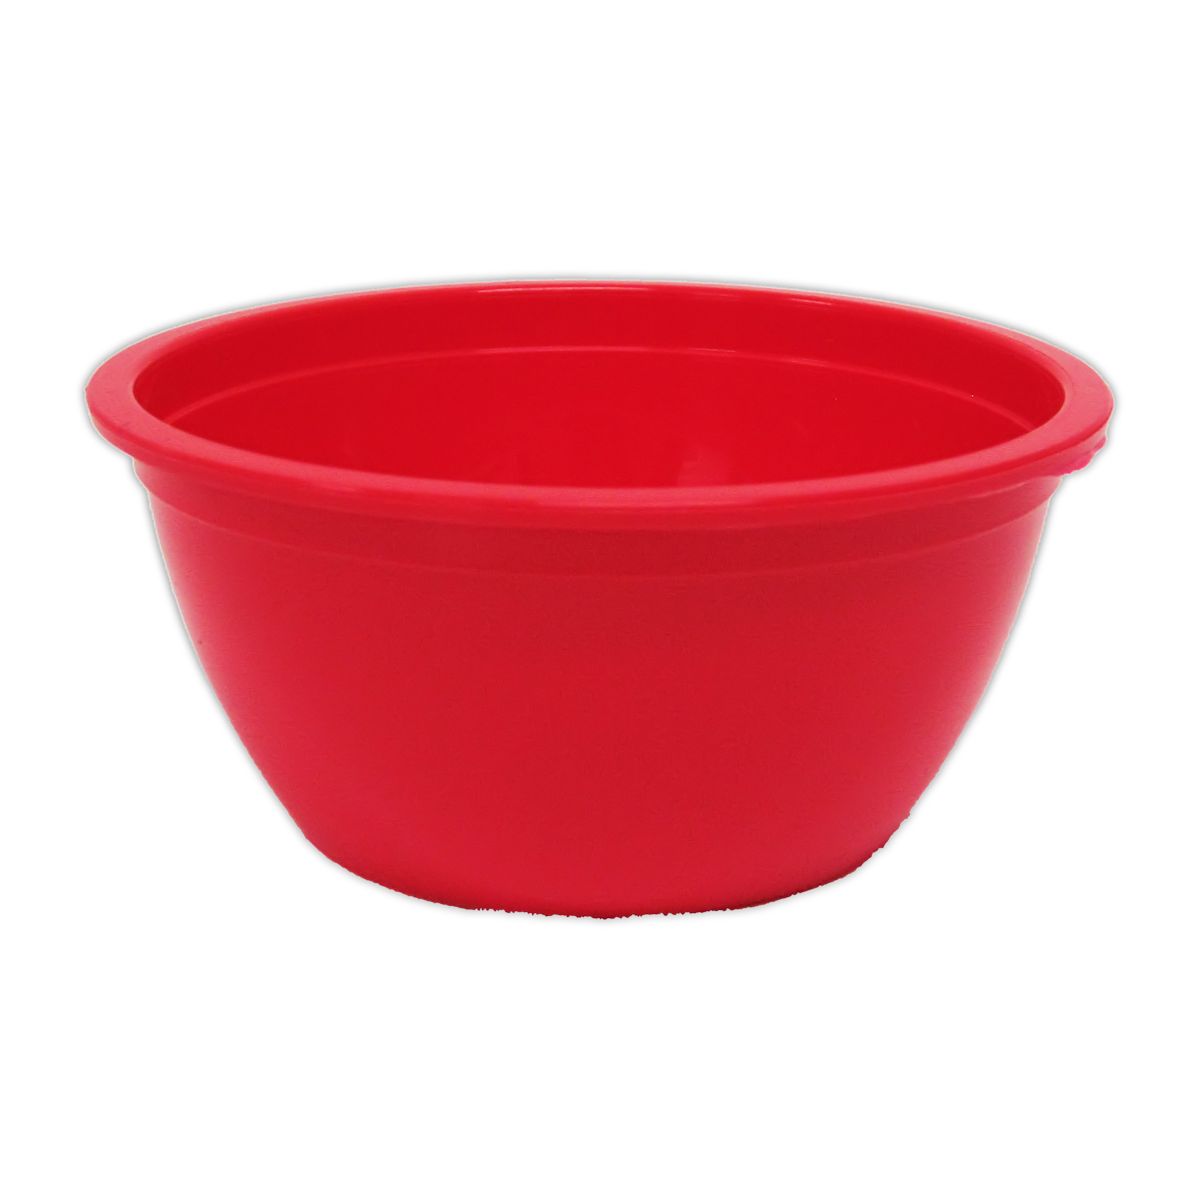 PUDB1425 - 1/4lb Red Pudding Bowl x 25